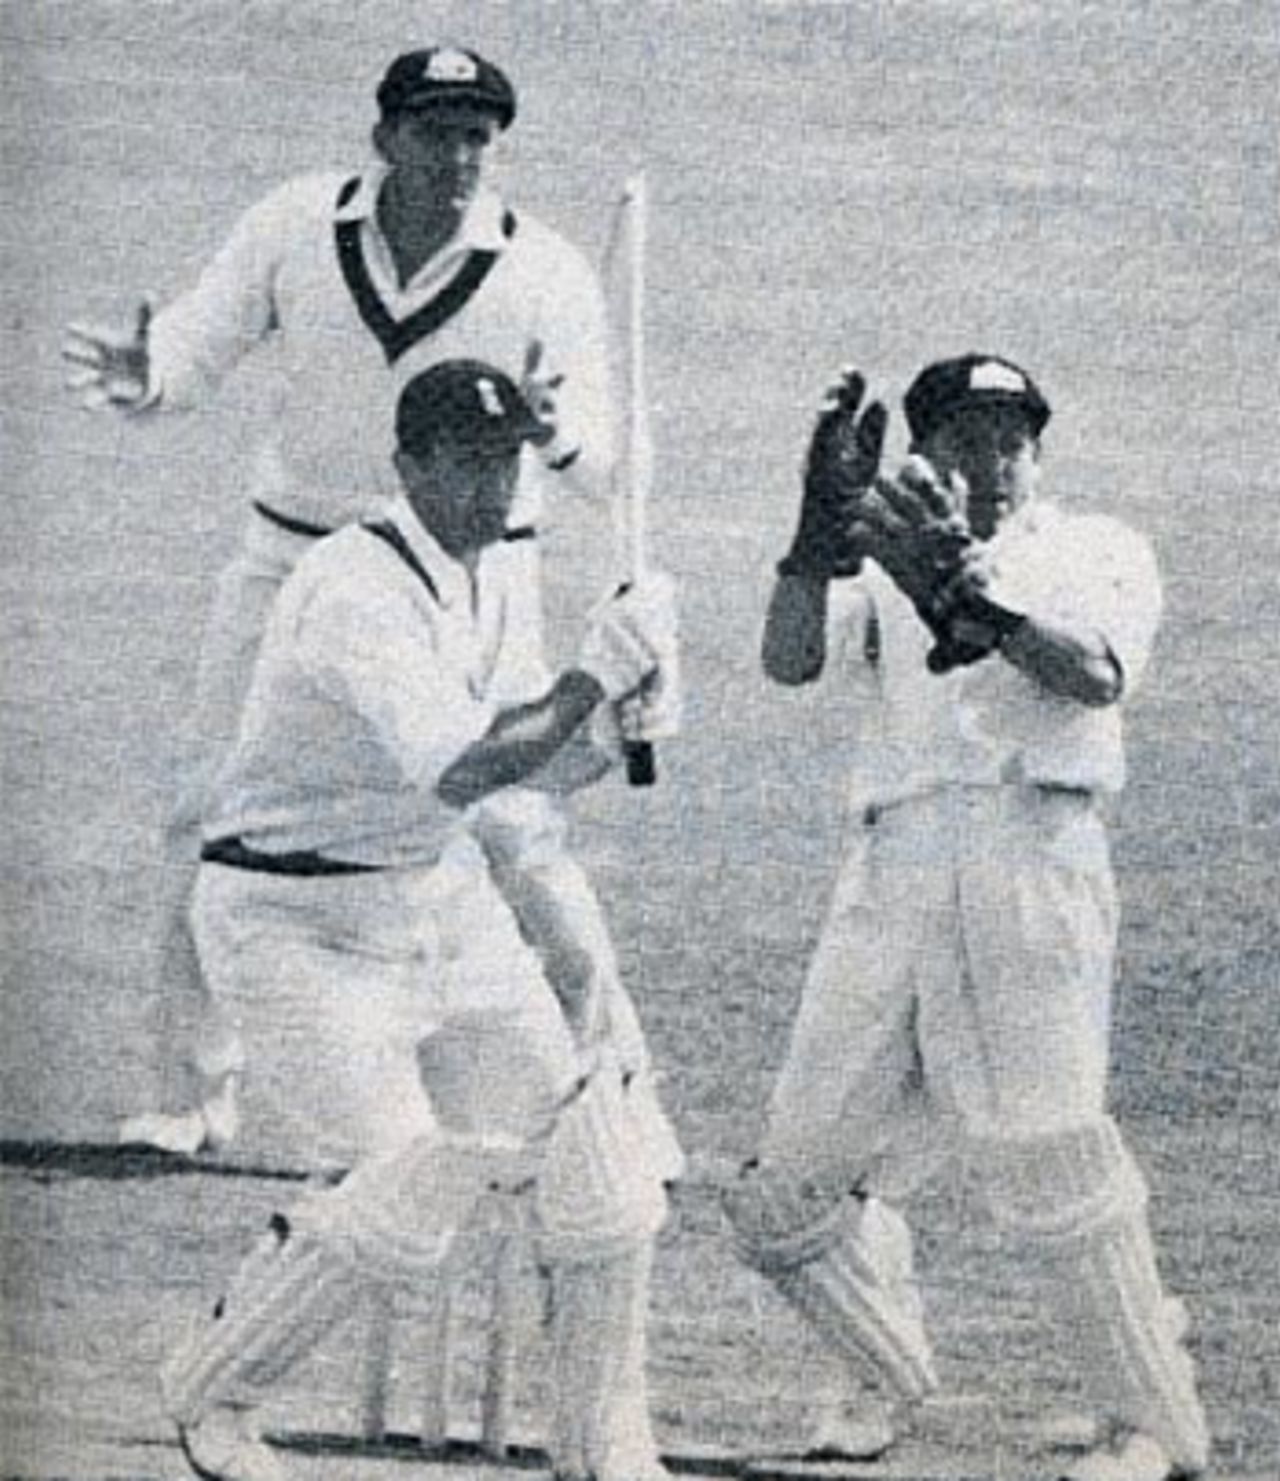 Ted Dexter during his match-saving 180, England v Australia, Edgbaston, 1961